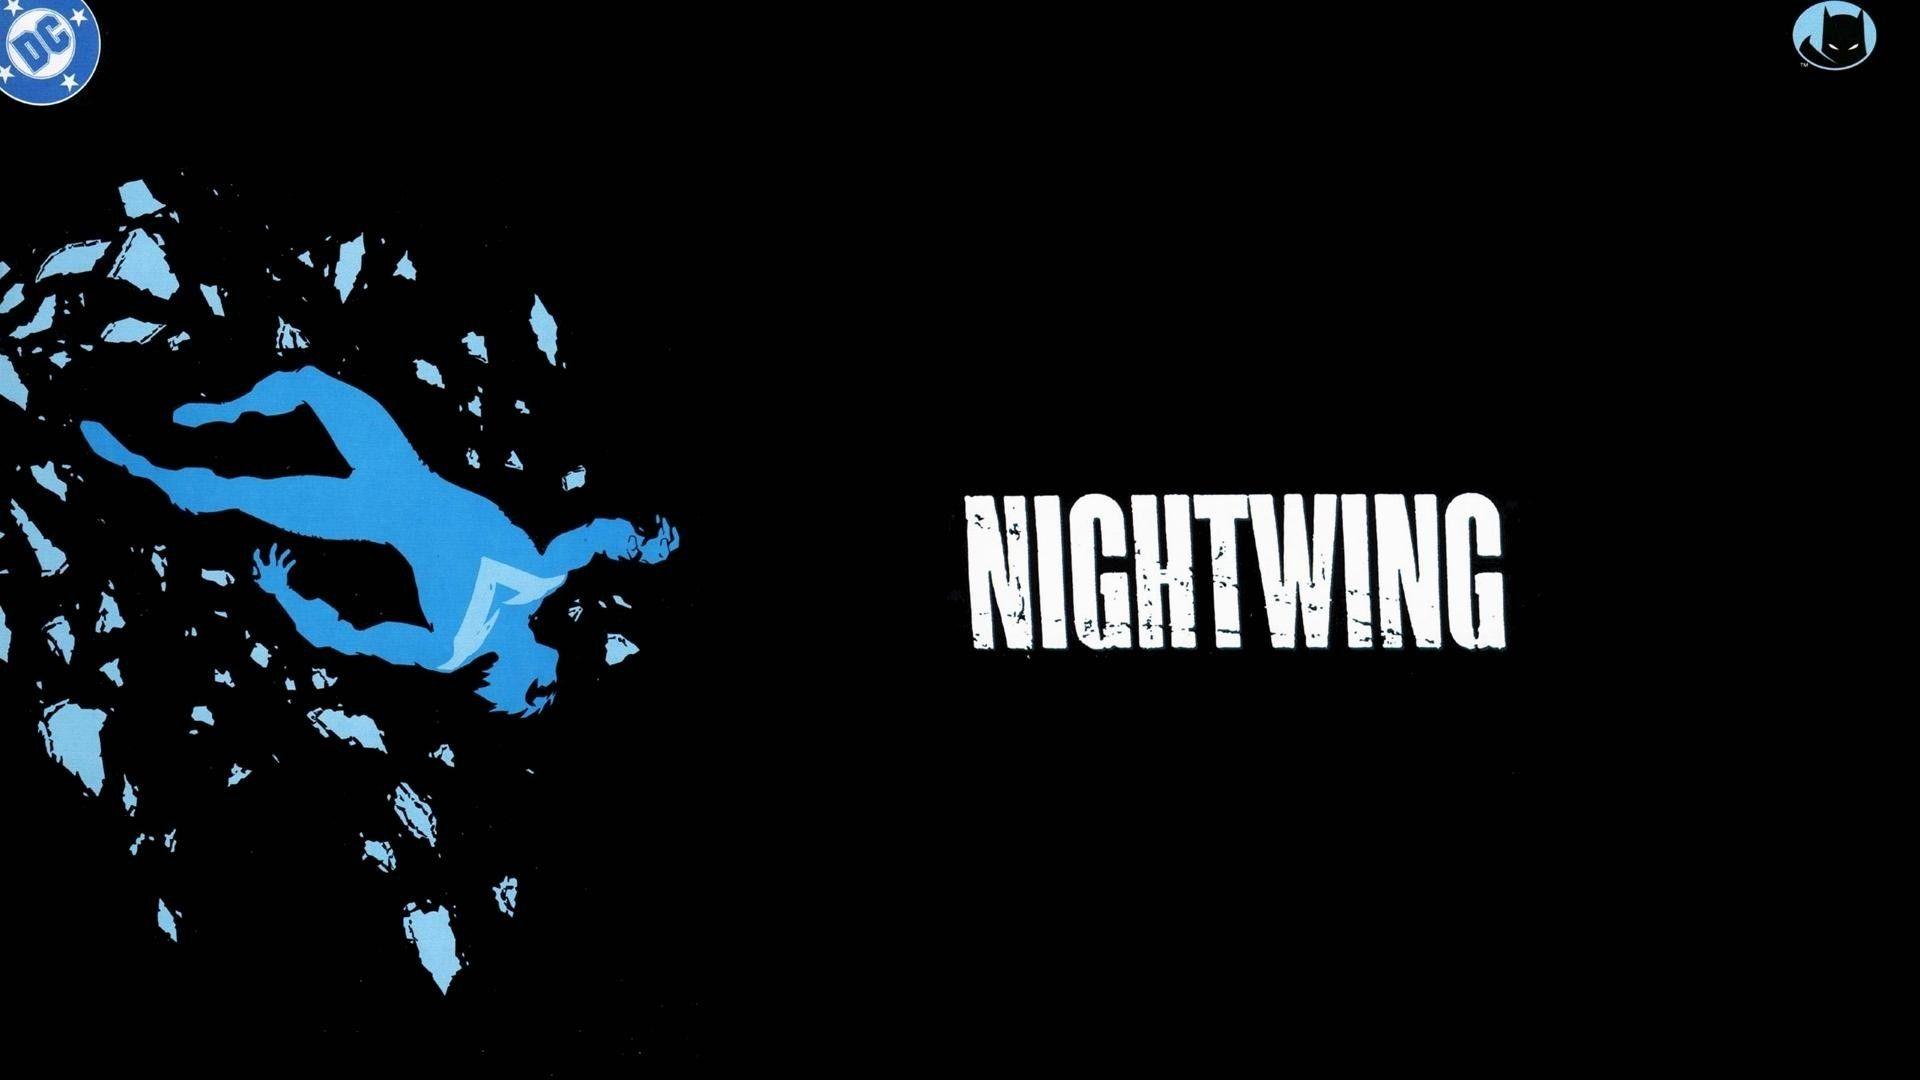 Nightwing HD Wallpaper 9 HD Wallpaper Free